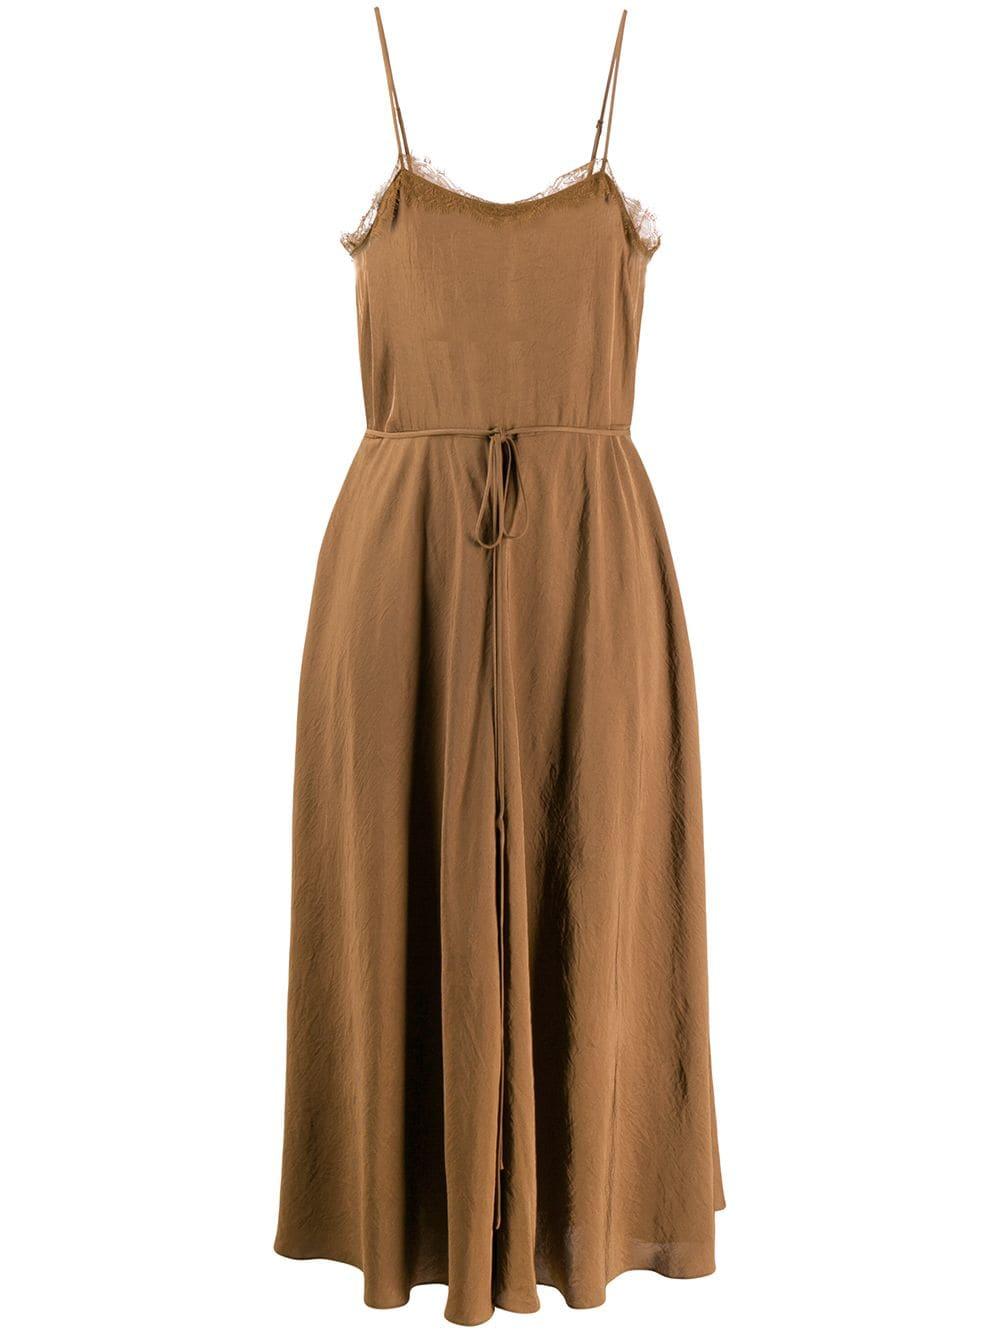 Vince Lace Spaghetti Straps Midi Dress in Brown - Lyst